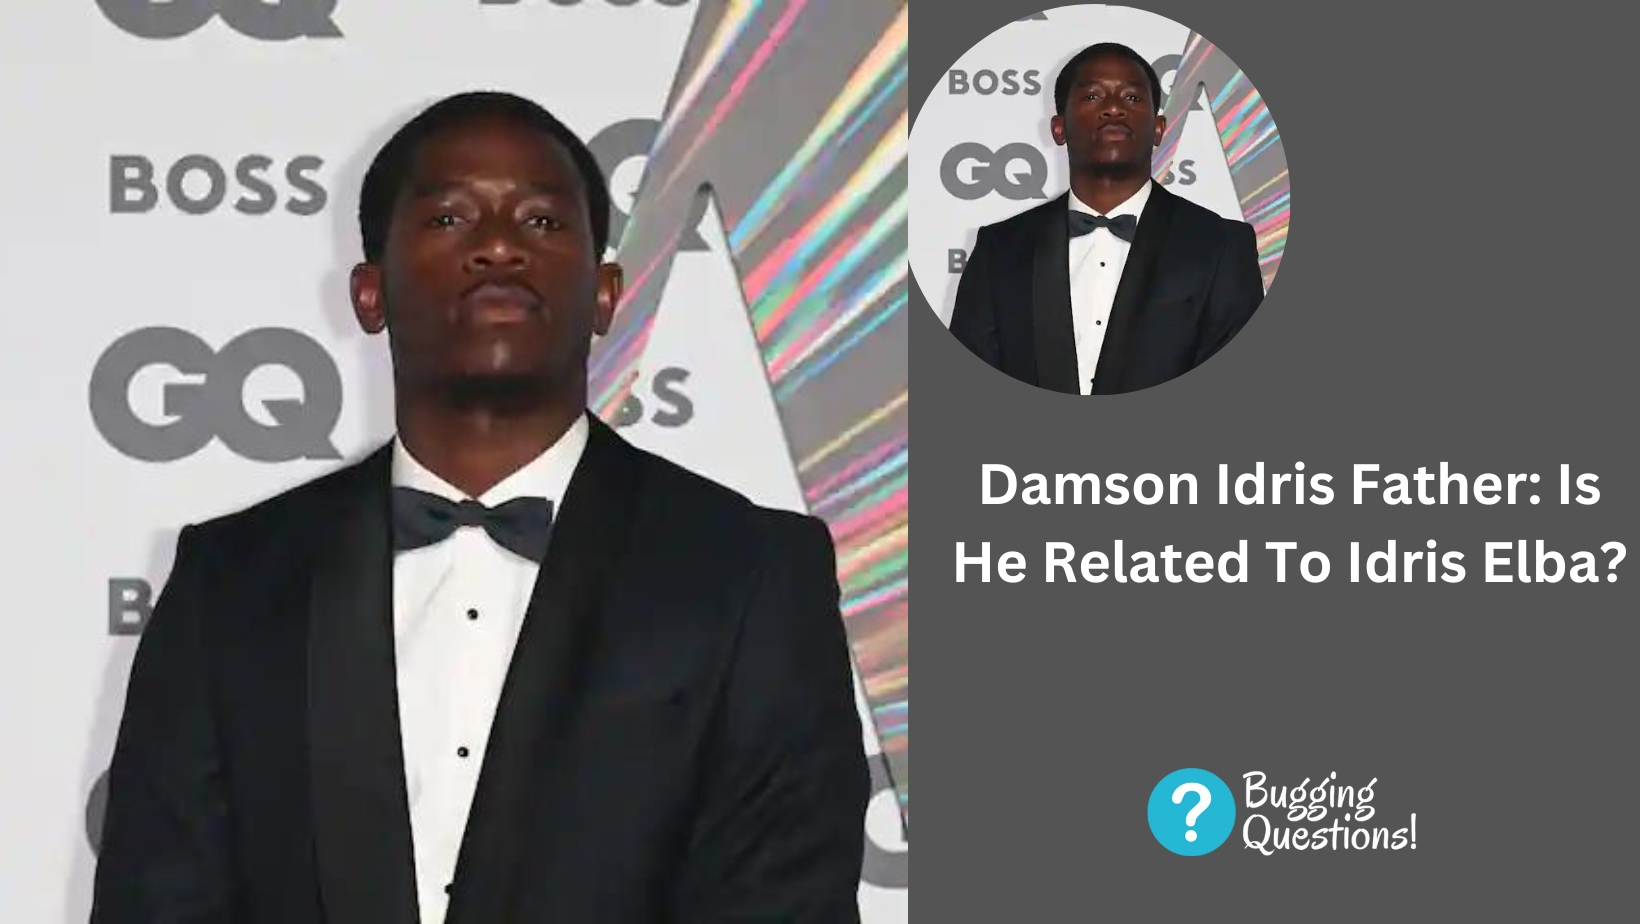 Damson Idris Father: Is He Related To Idris Elba?